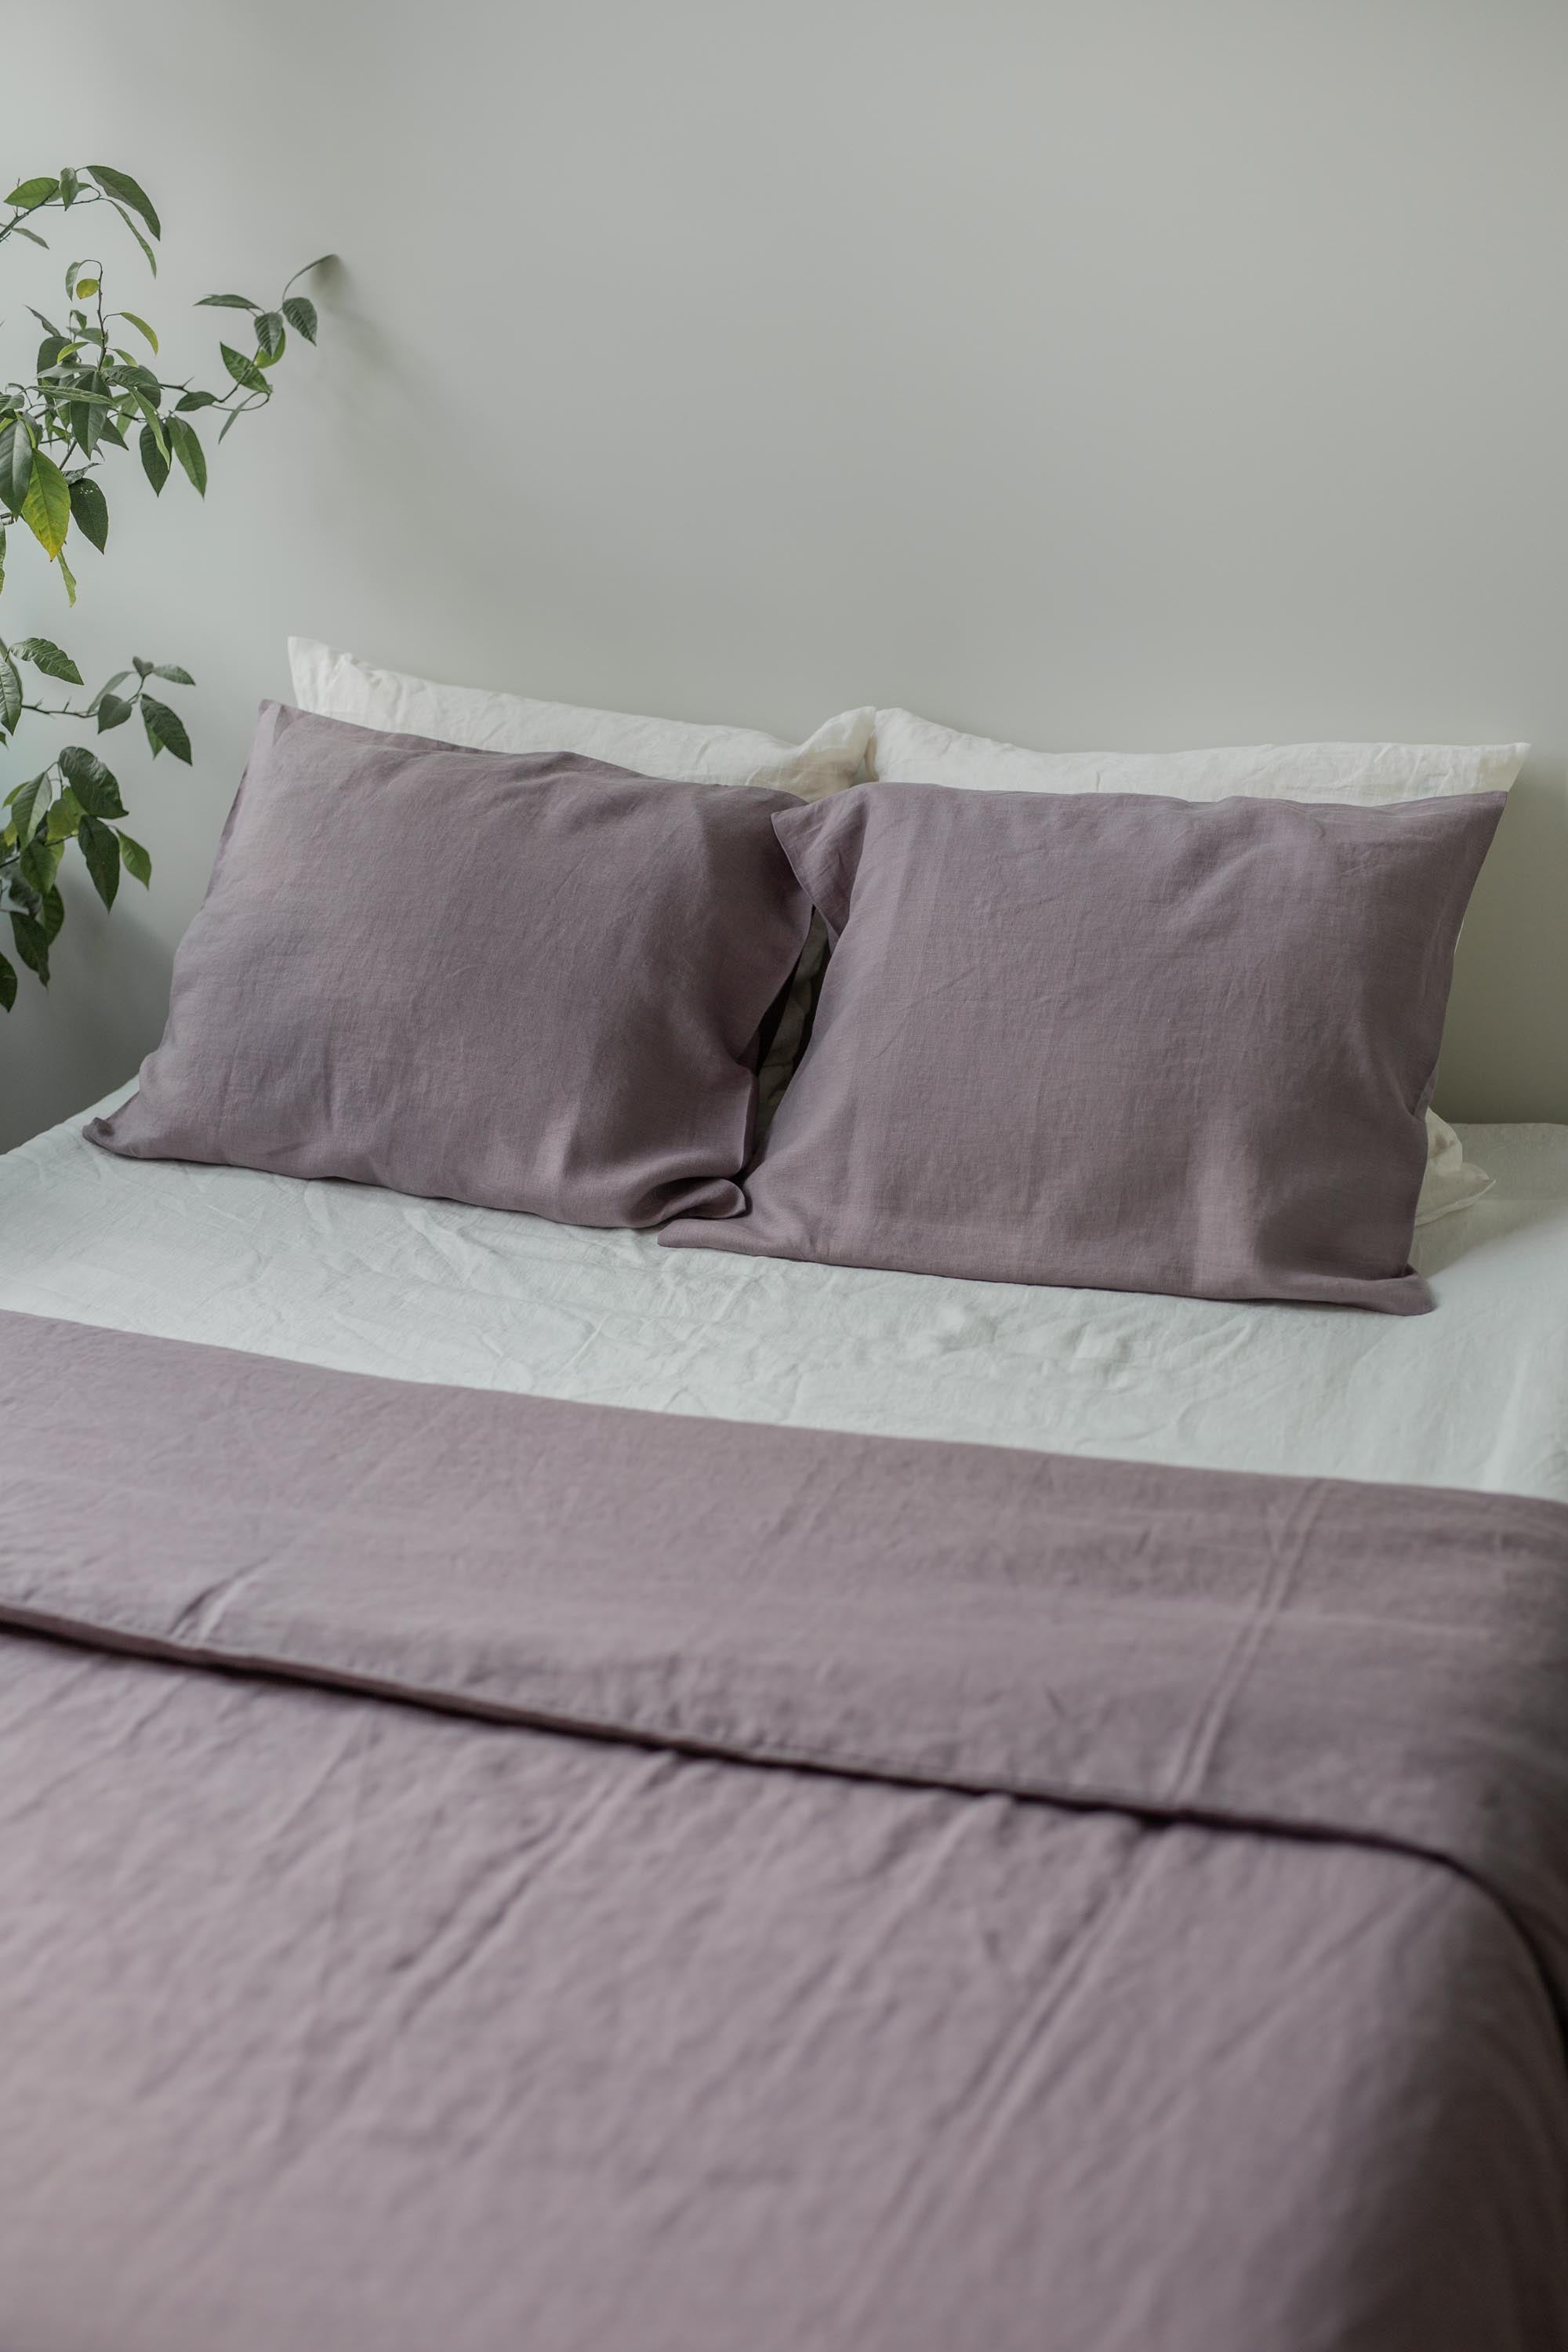 Dusty Lavender LInen Pillowcase On Bed By AmourlInen